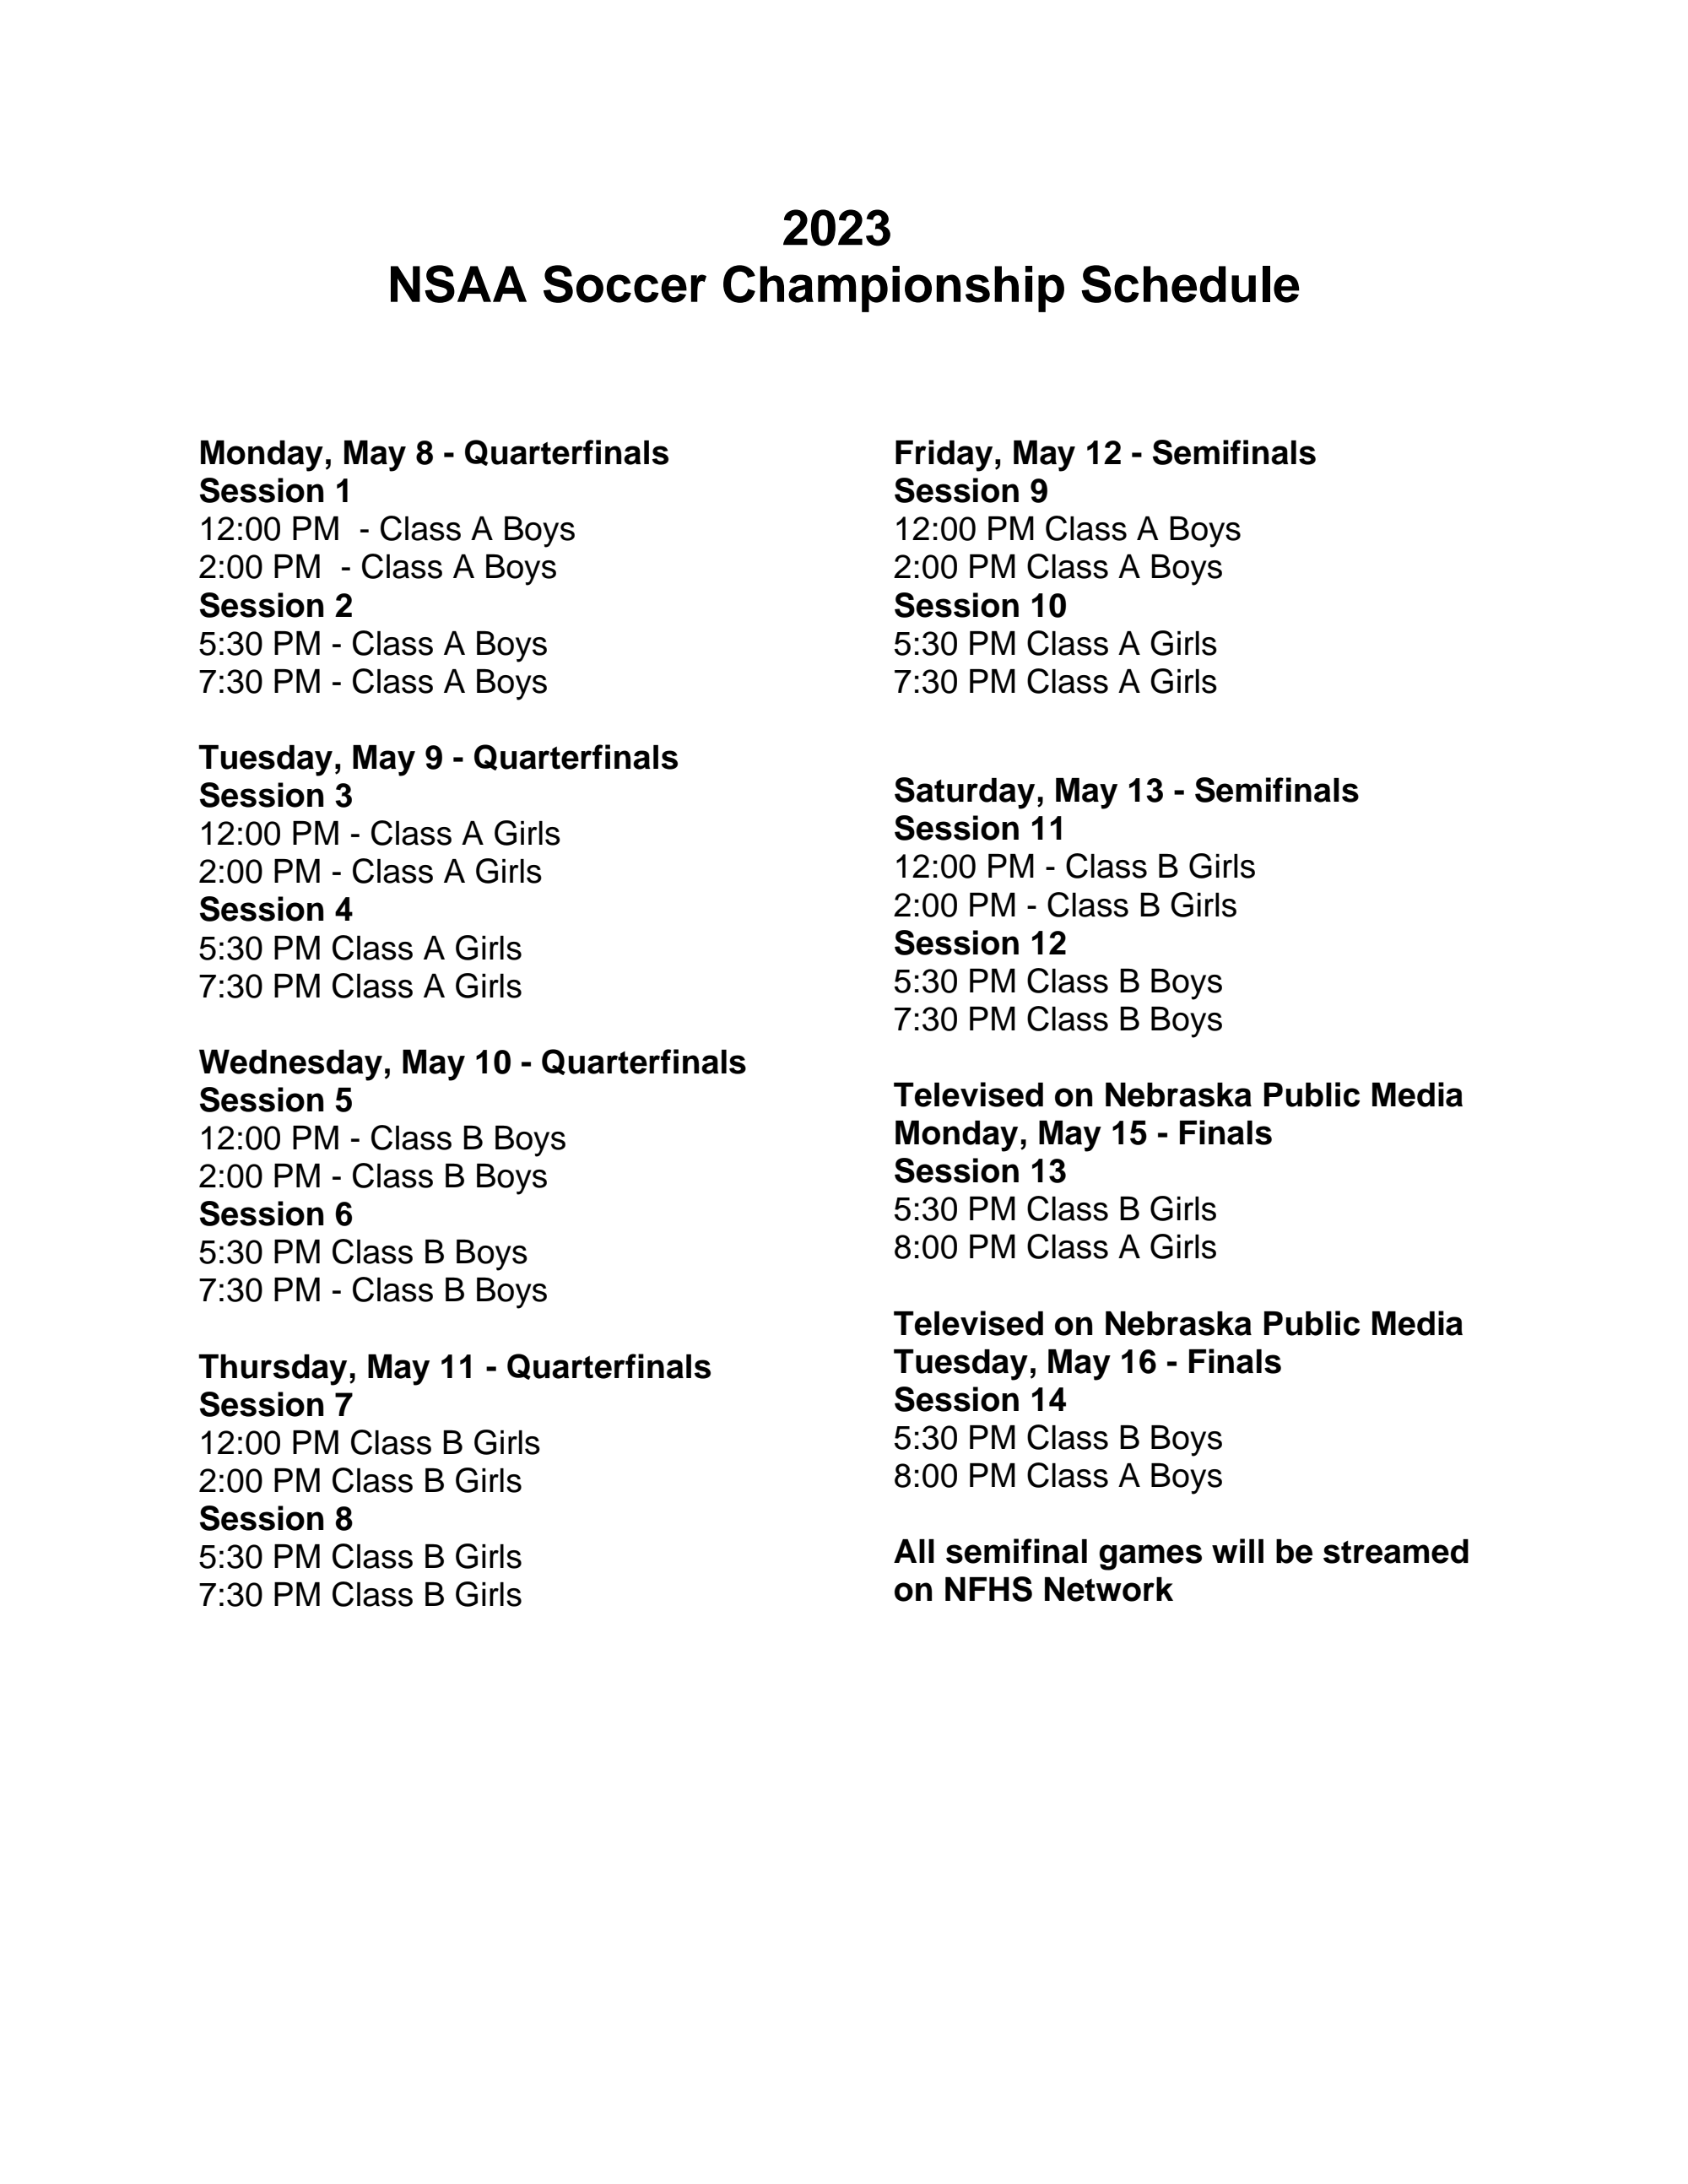 2023 NSAA Soccer Championship Schedule DocumentCloud